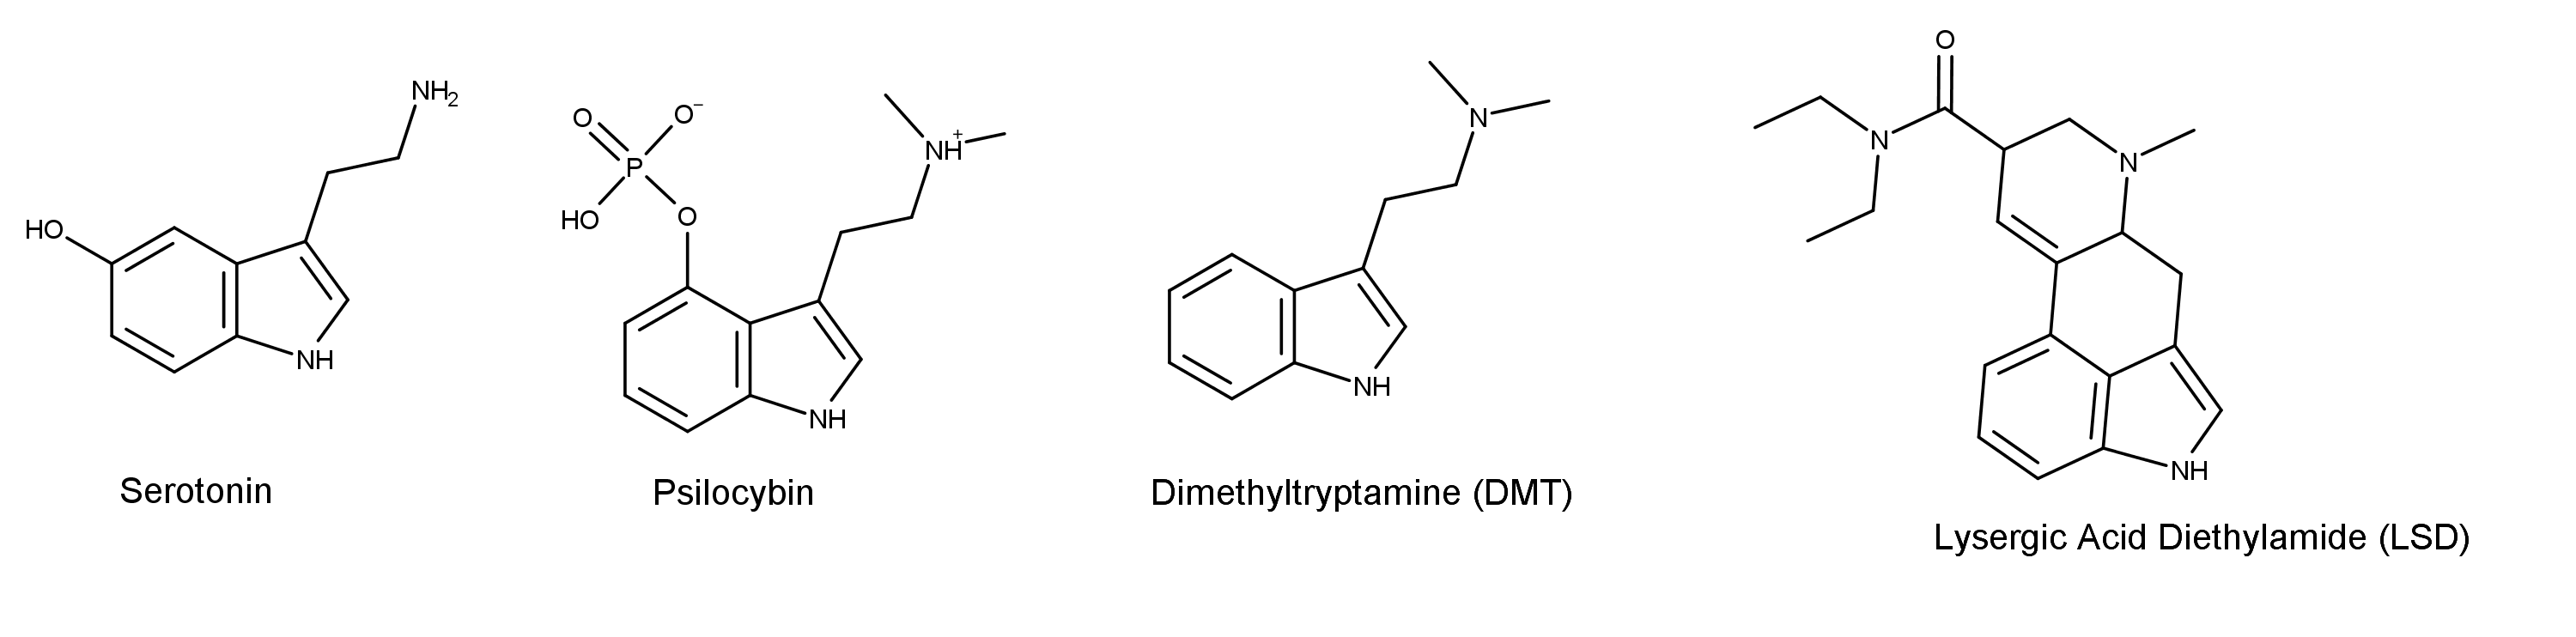 3000-serotonin-psilocybin-DMT-LSD-scaled.png